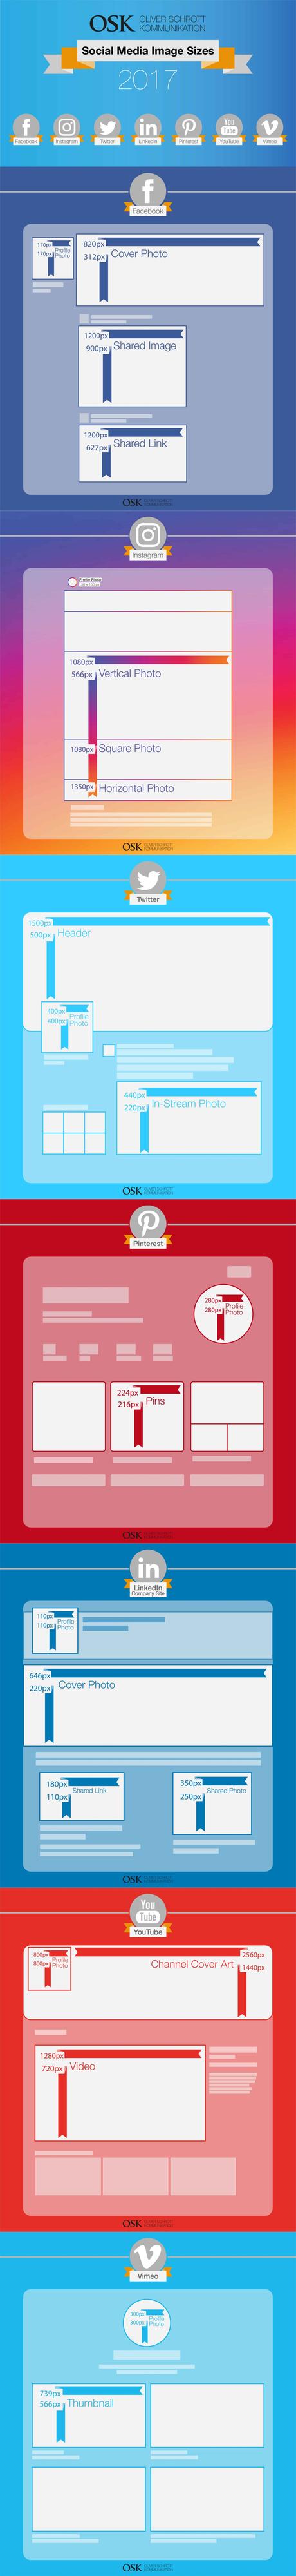 Bildergrößen 2017 der verschiedenen Social Media Portale [#Infografik]